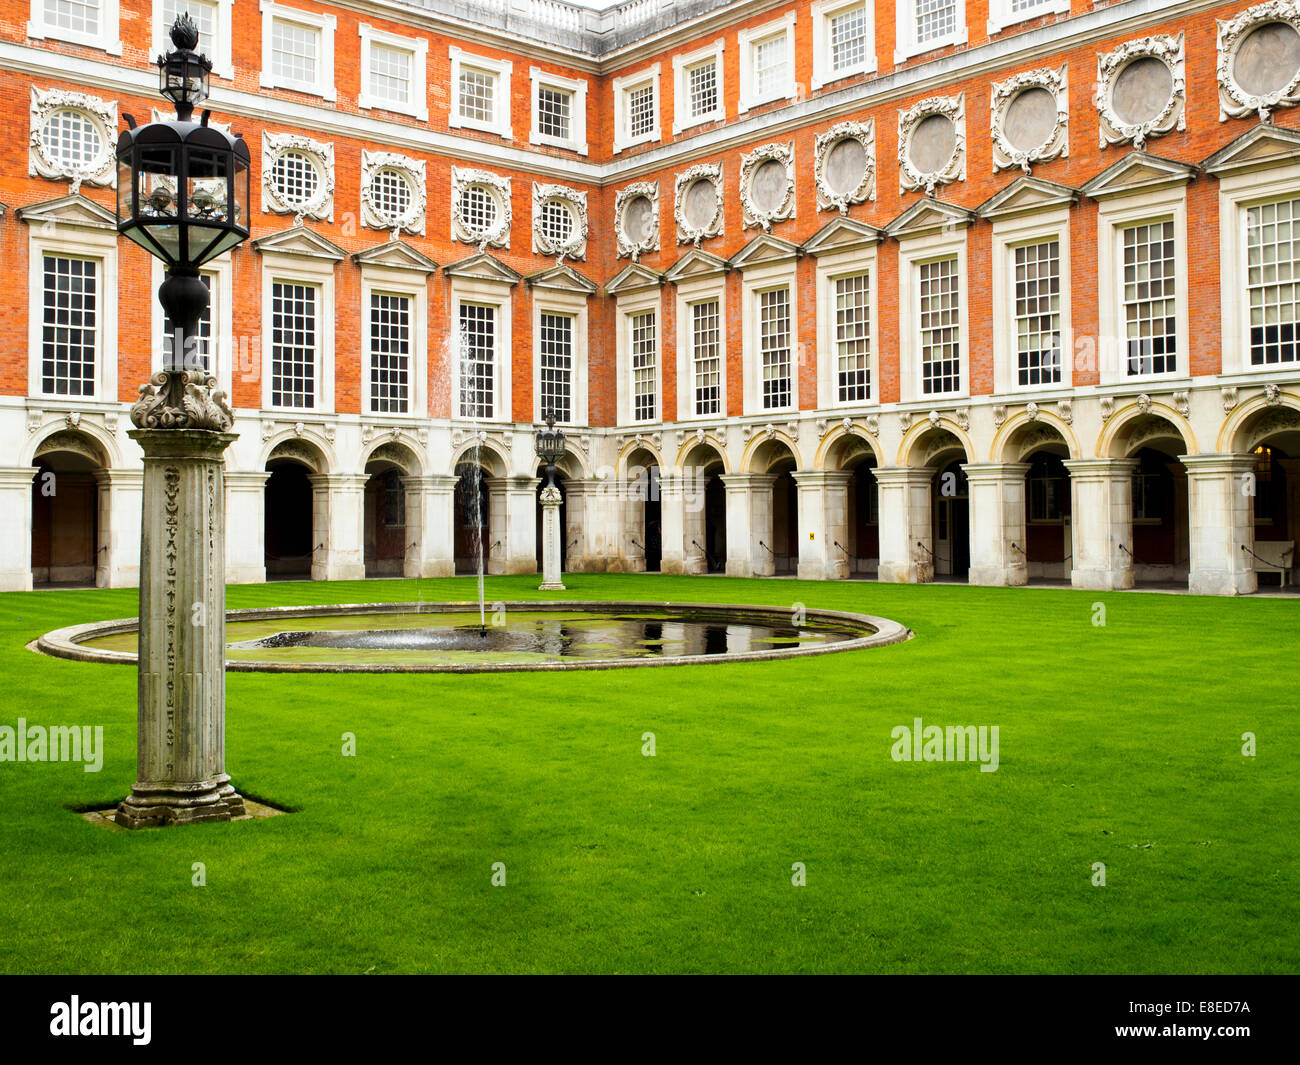 Fountain court at Hampton Court Palace - England Stock Photo